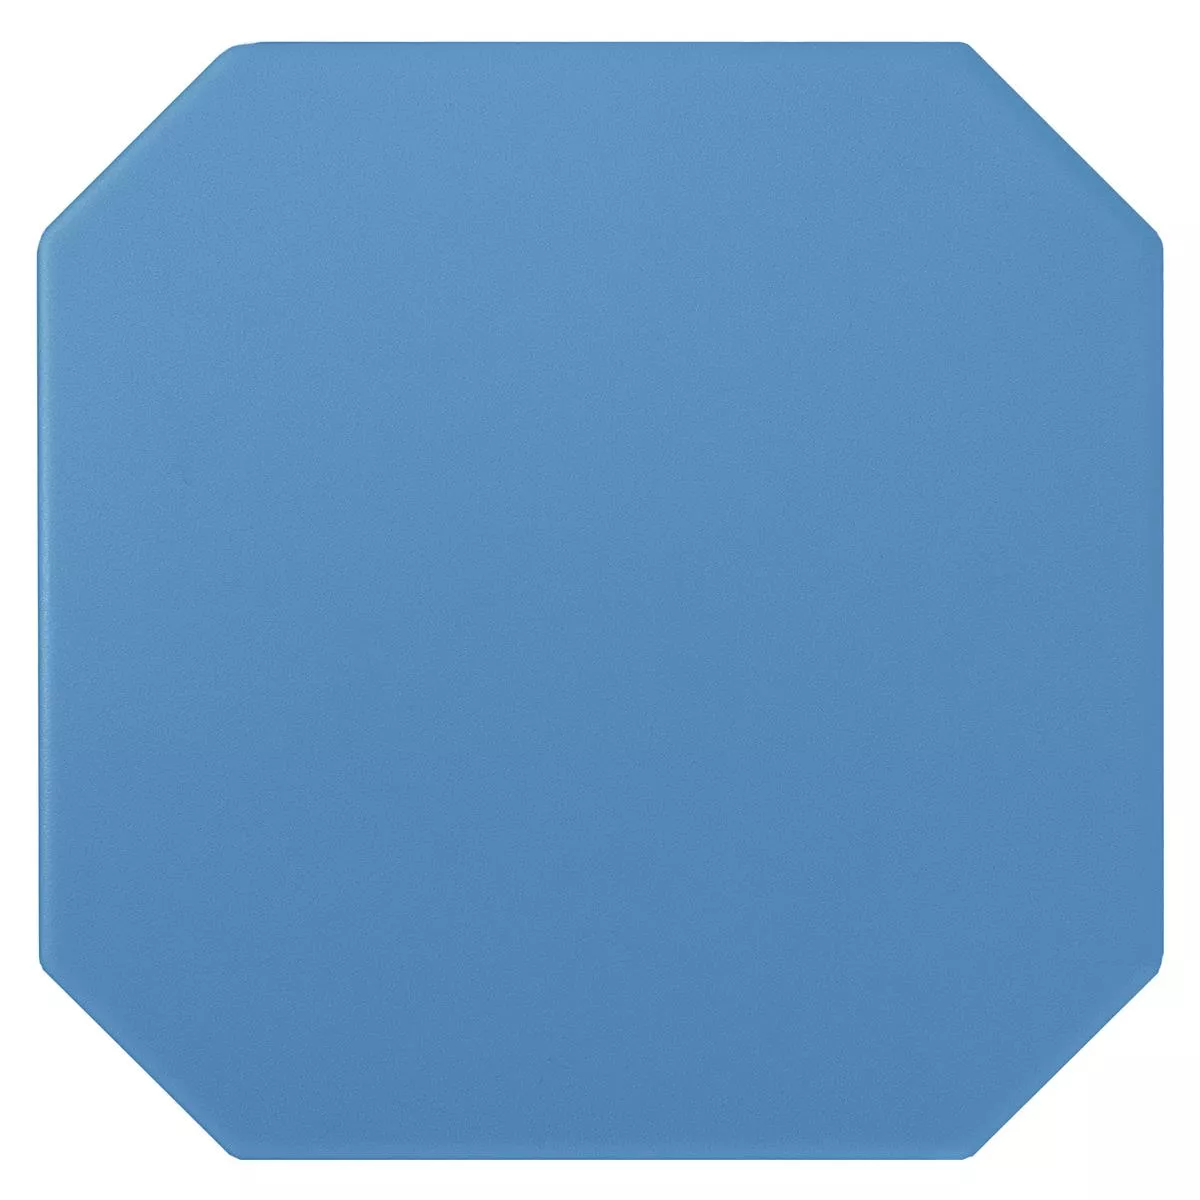 Gres Porcellanato Piastrelle Genexia Uni Blu Ottagono 20x20cm